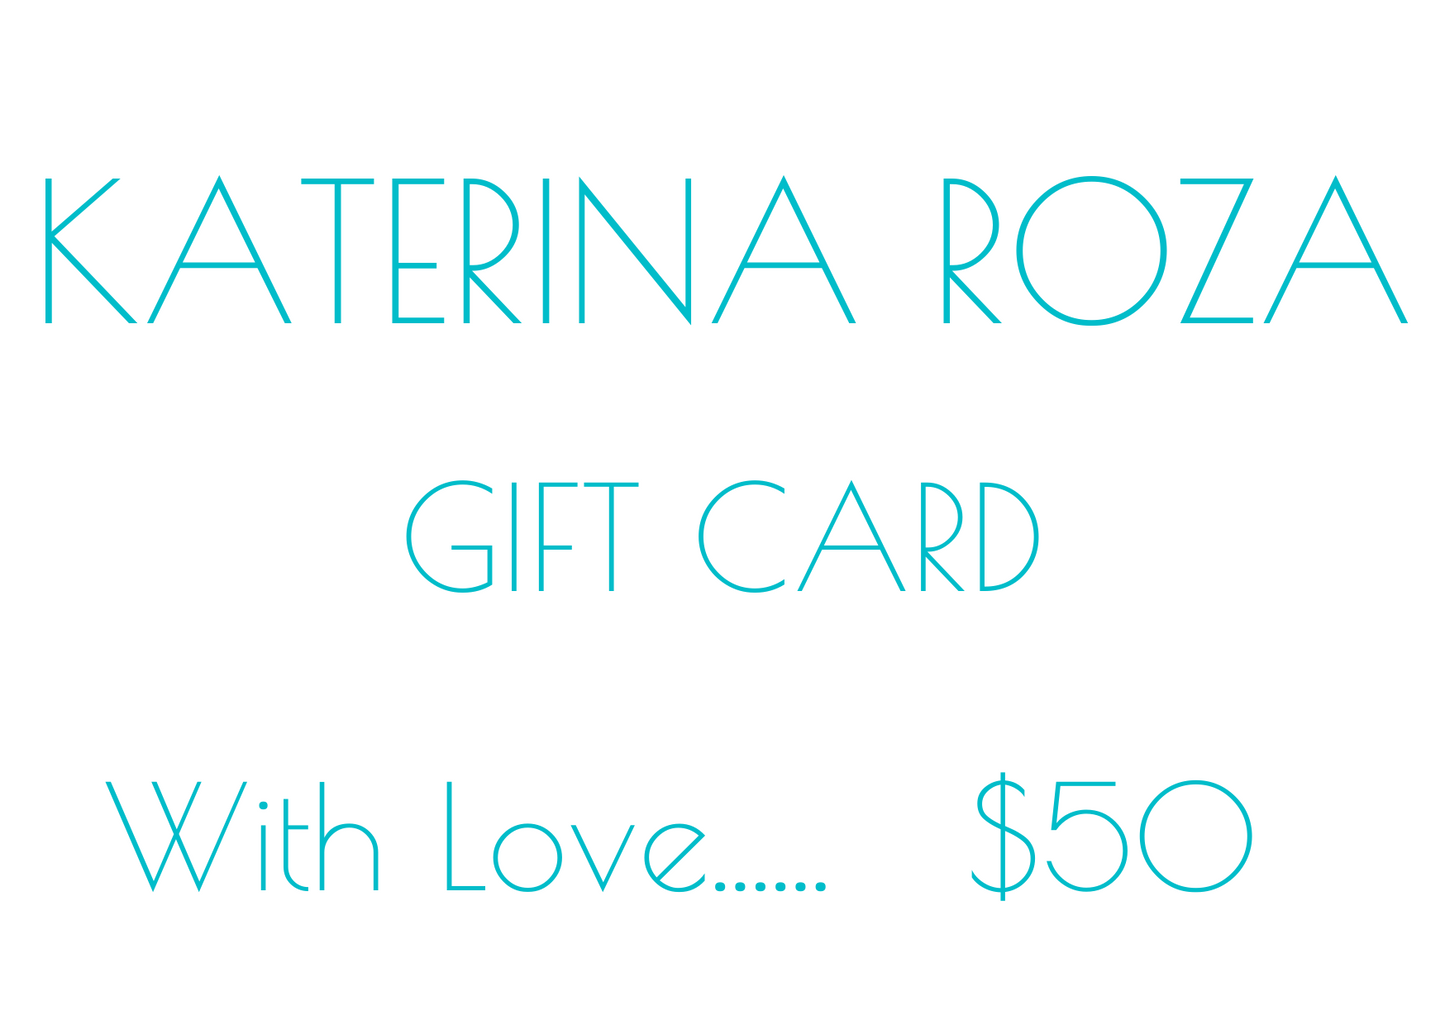 KATERINA ROZA GIFT CARD $50